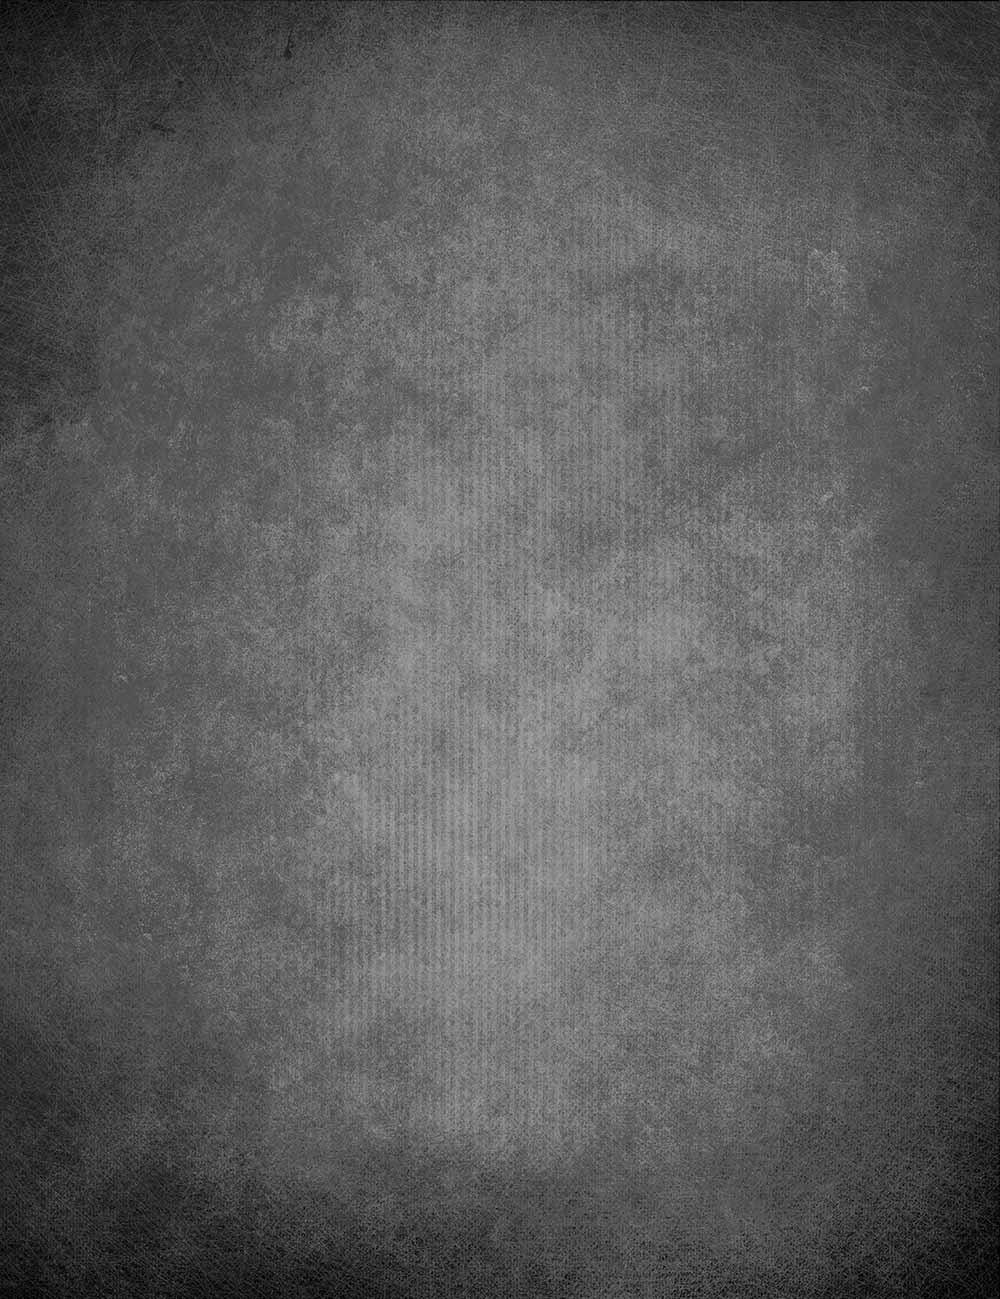 Abstract Gray White Texture Photography Backdrop Shopbackdrop